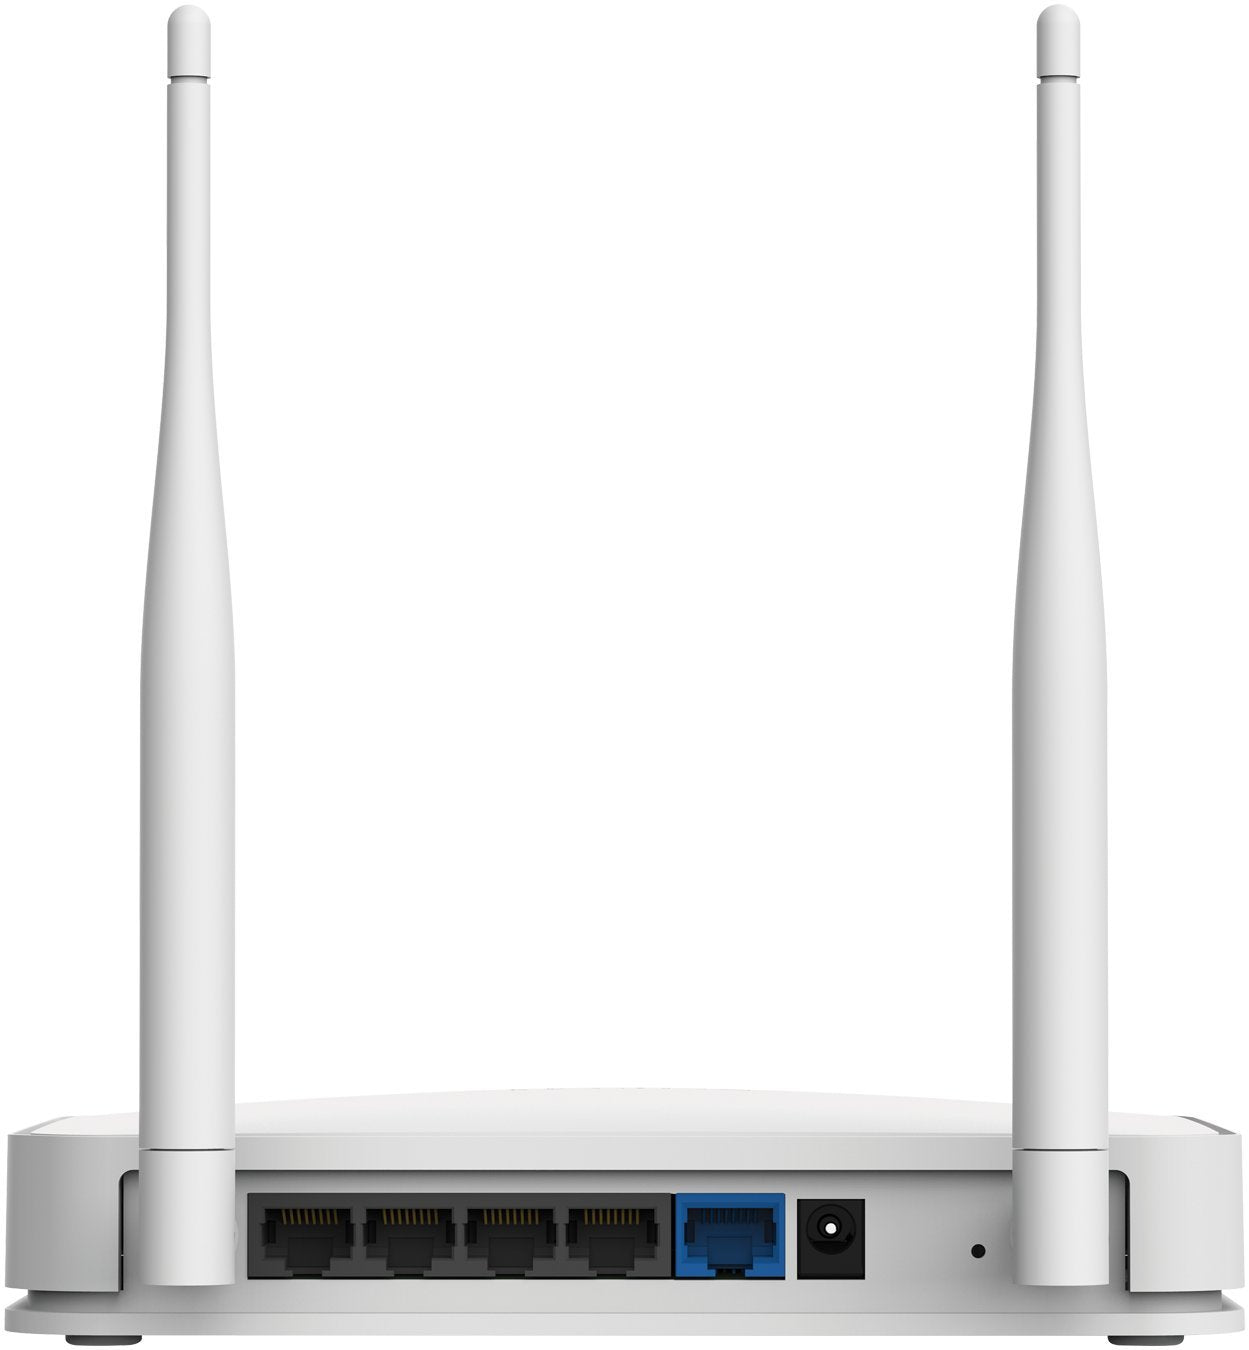 NETGEAR N300 Wi-Fi Router with High Power 5dBi External Antennas (WNR2020v2)